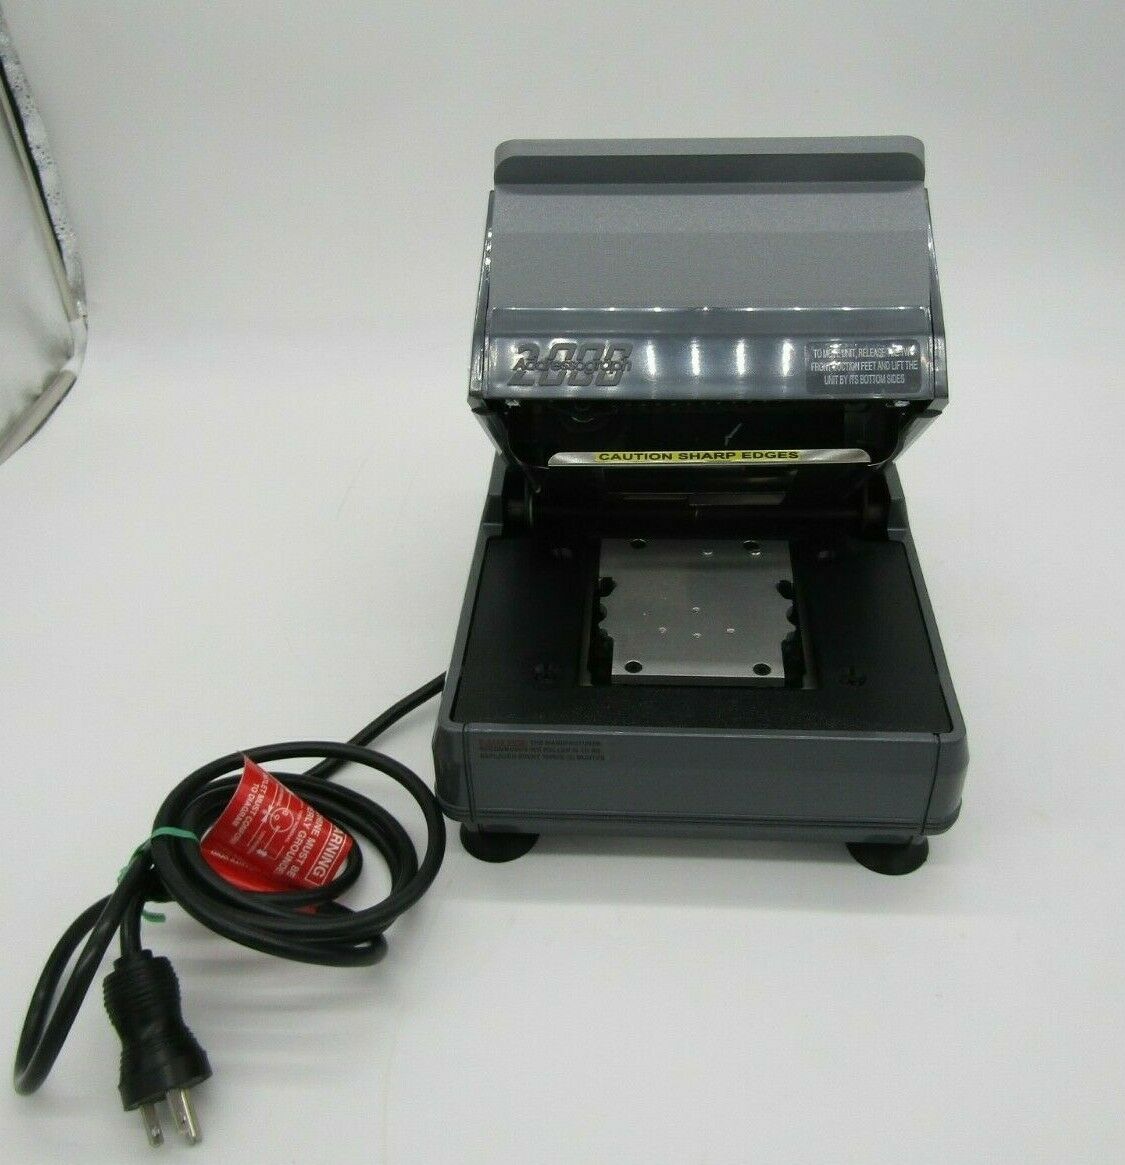 Addressograph Newbold 2000 Brand New Medical Electric Card Embosser Machine